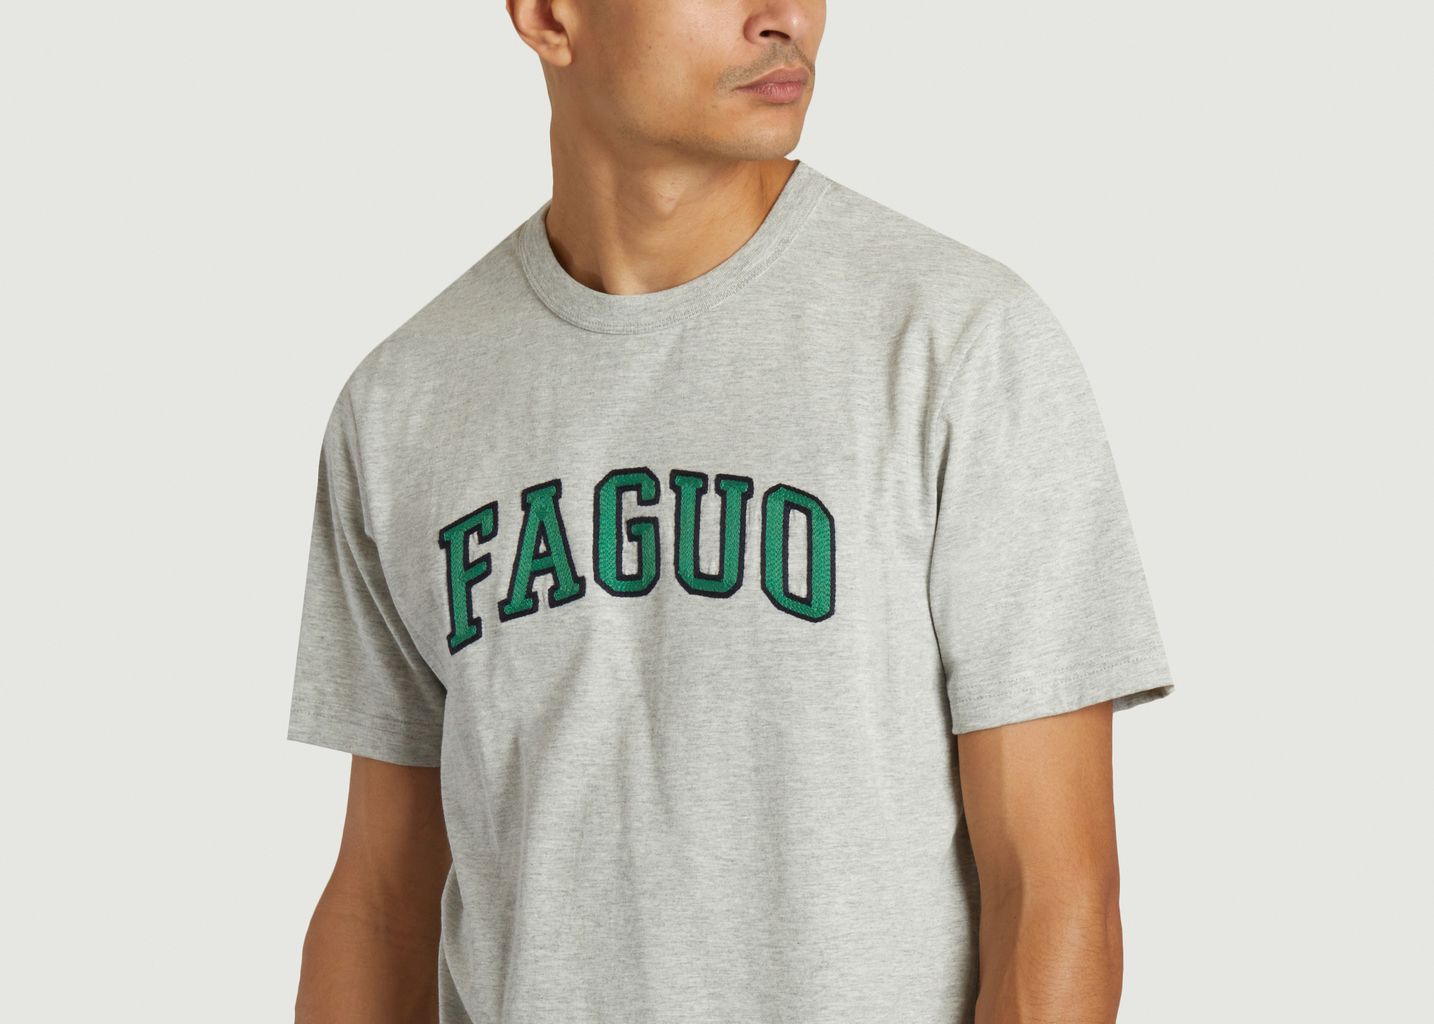 Lugny T-shirt - Faguo